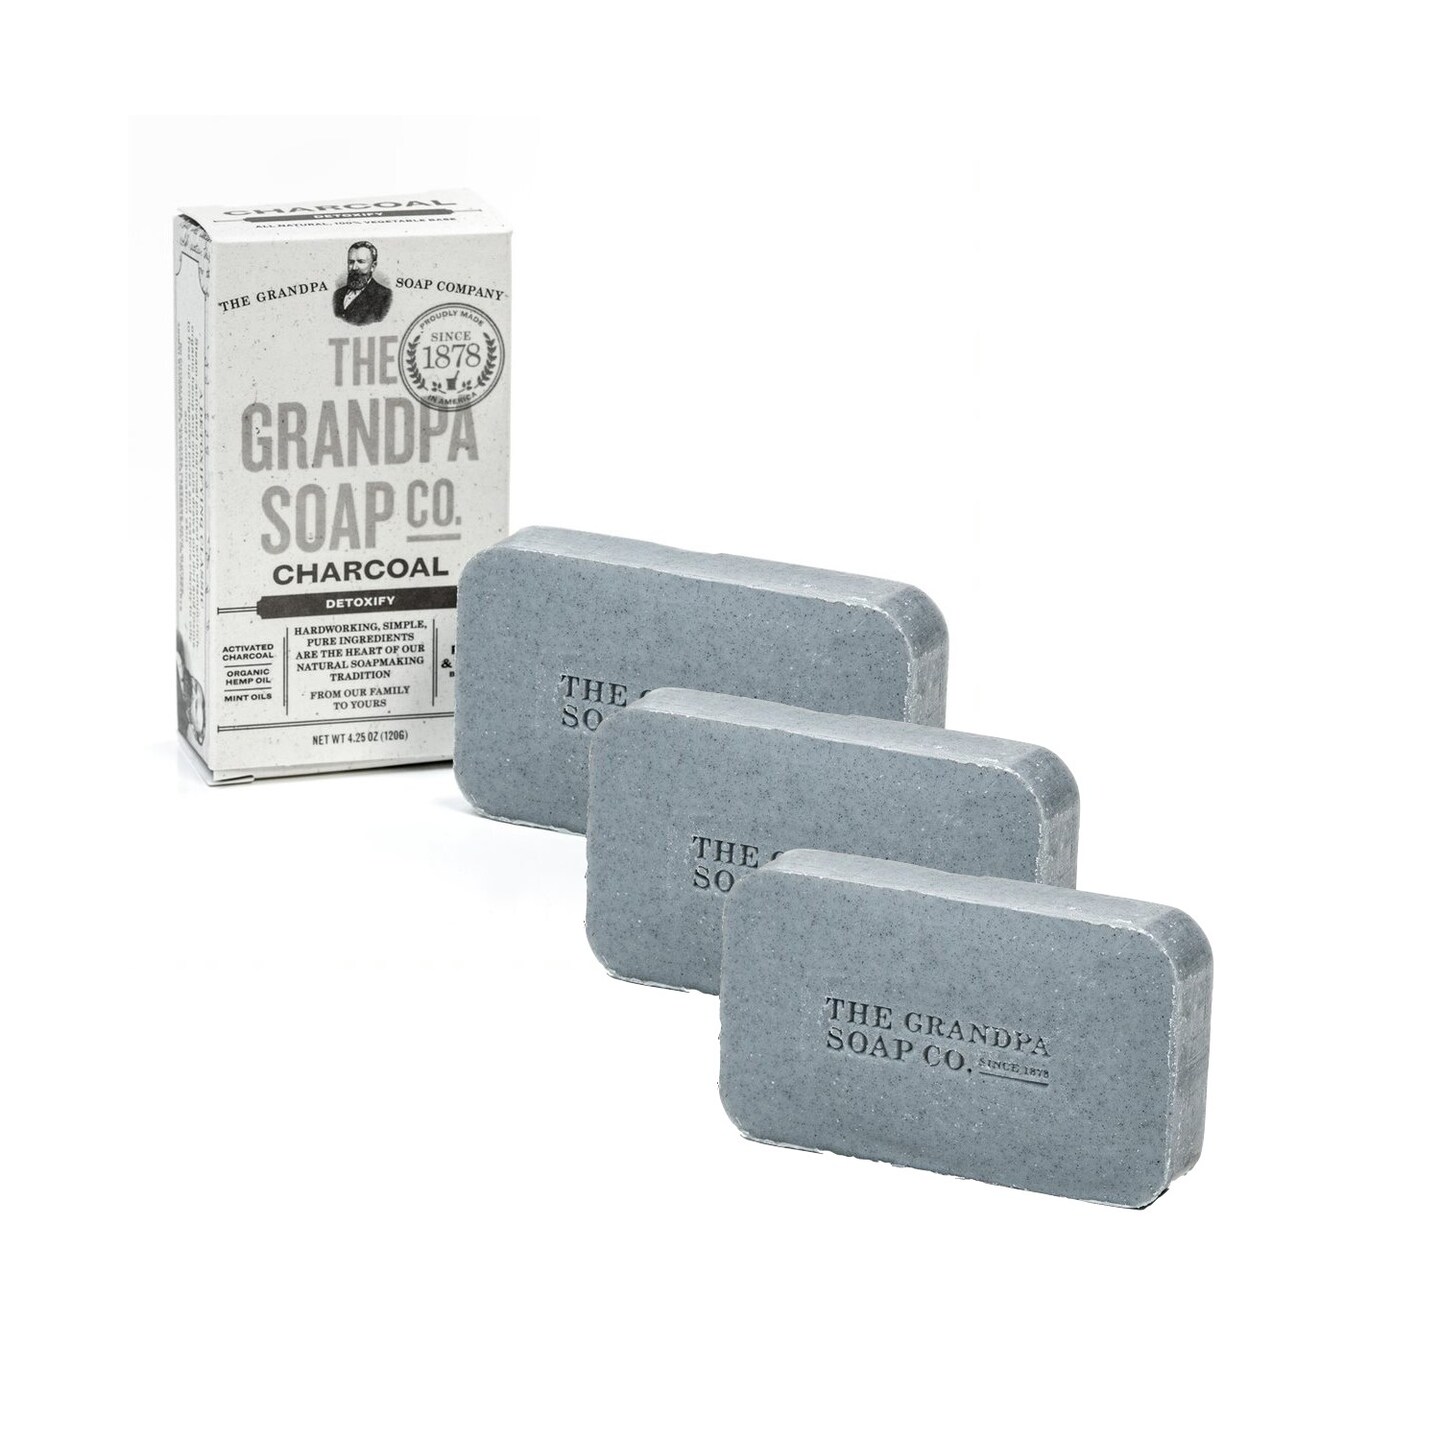 Charcoal Bar Soap by The Grandpa Soap Company